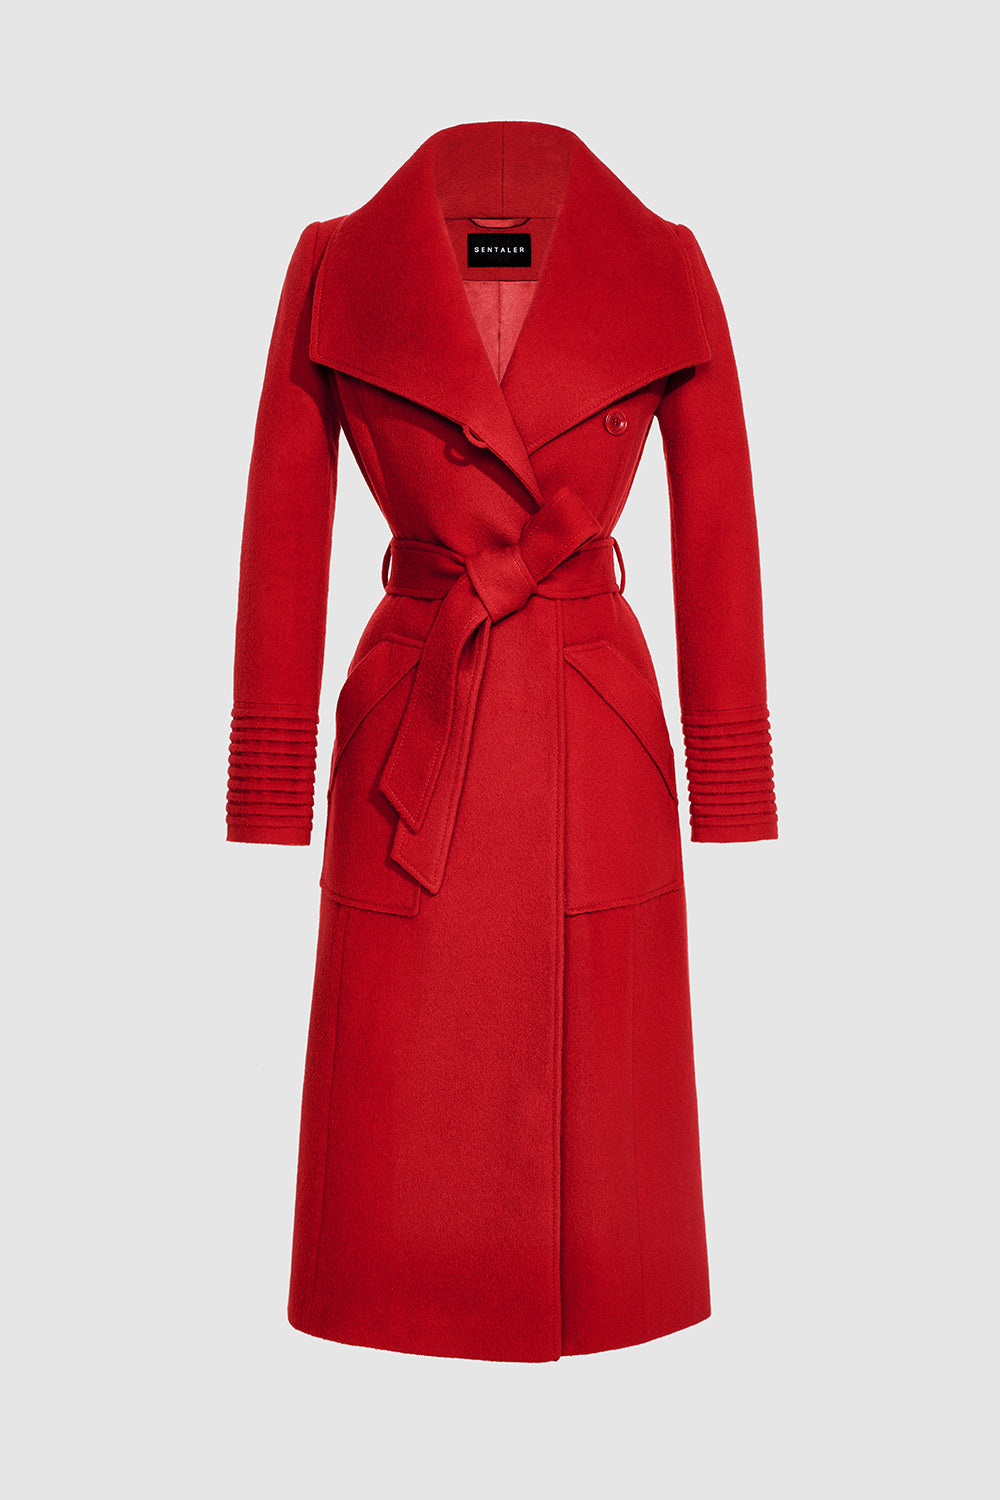 Mid Length Shawl Collar Wrap Garnet Red Coat